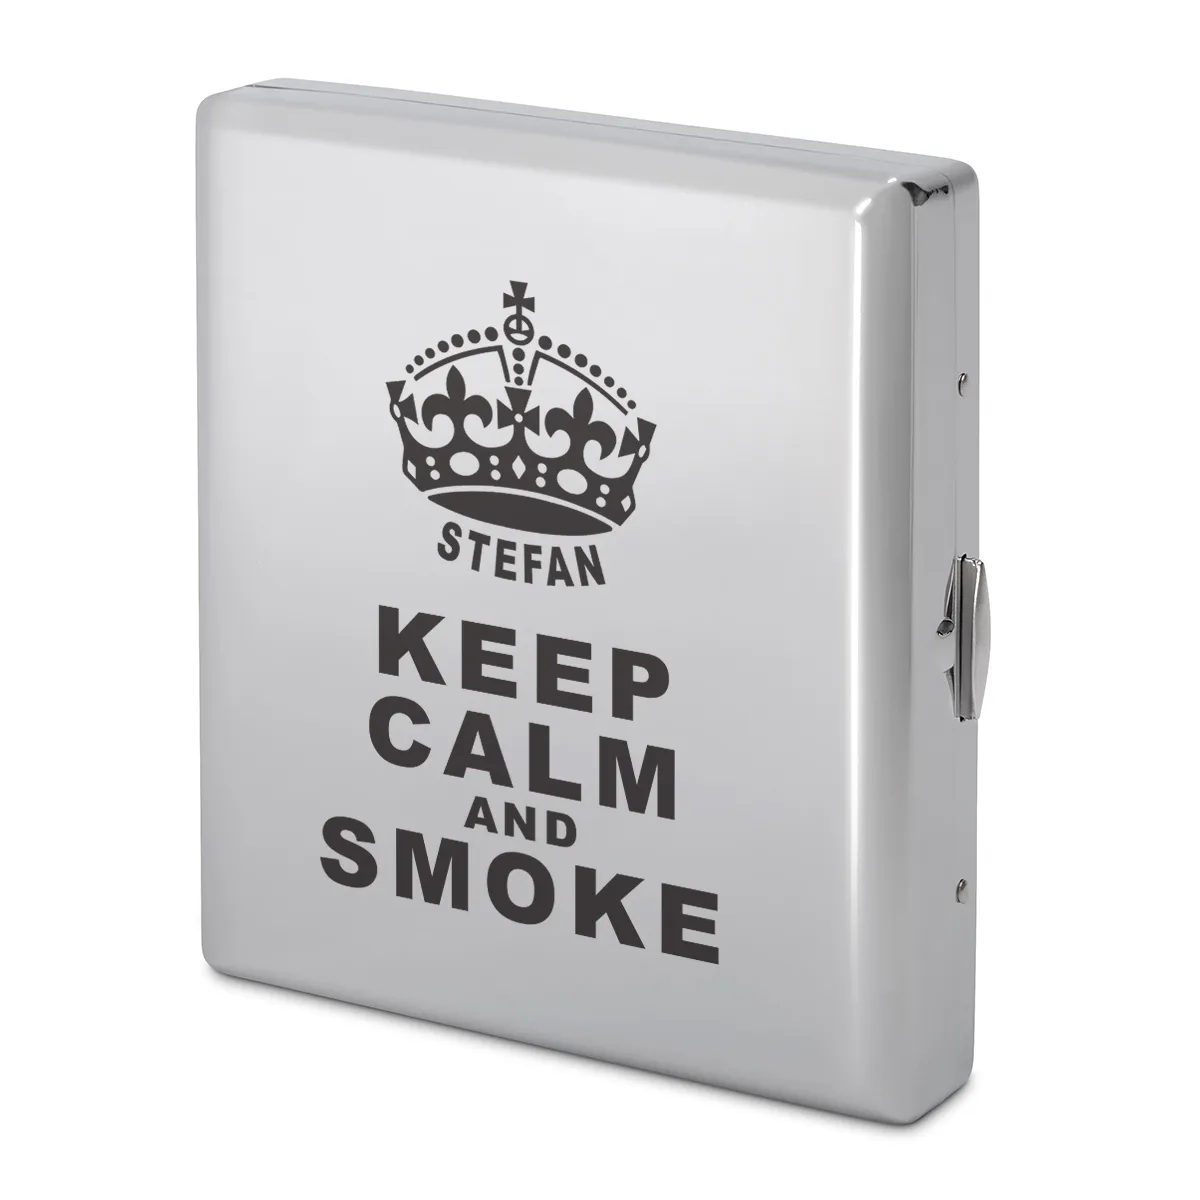 18er Zigarettenetui Chrom poliert - Keep Calm